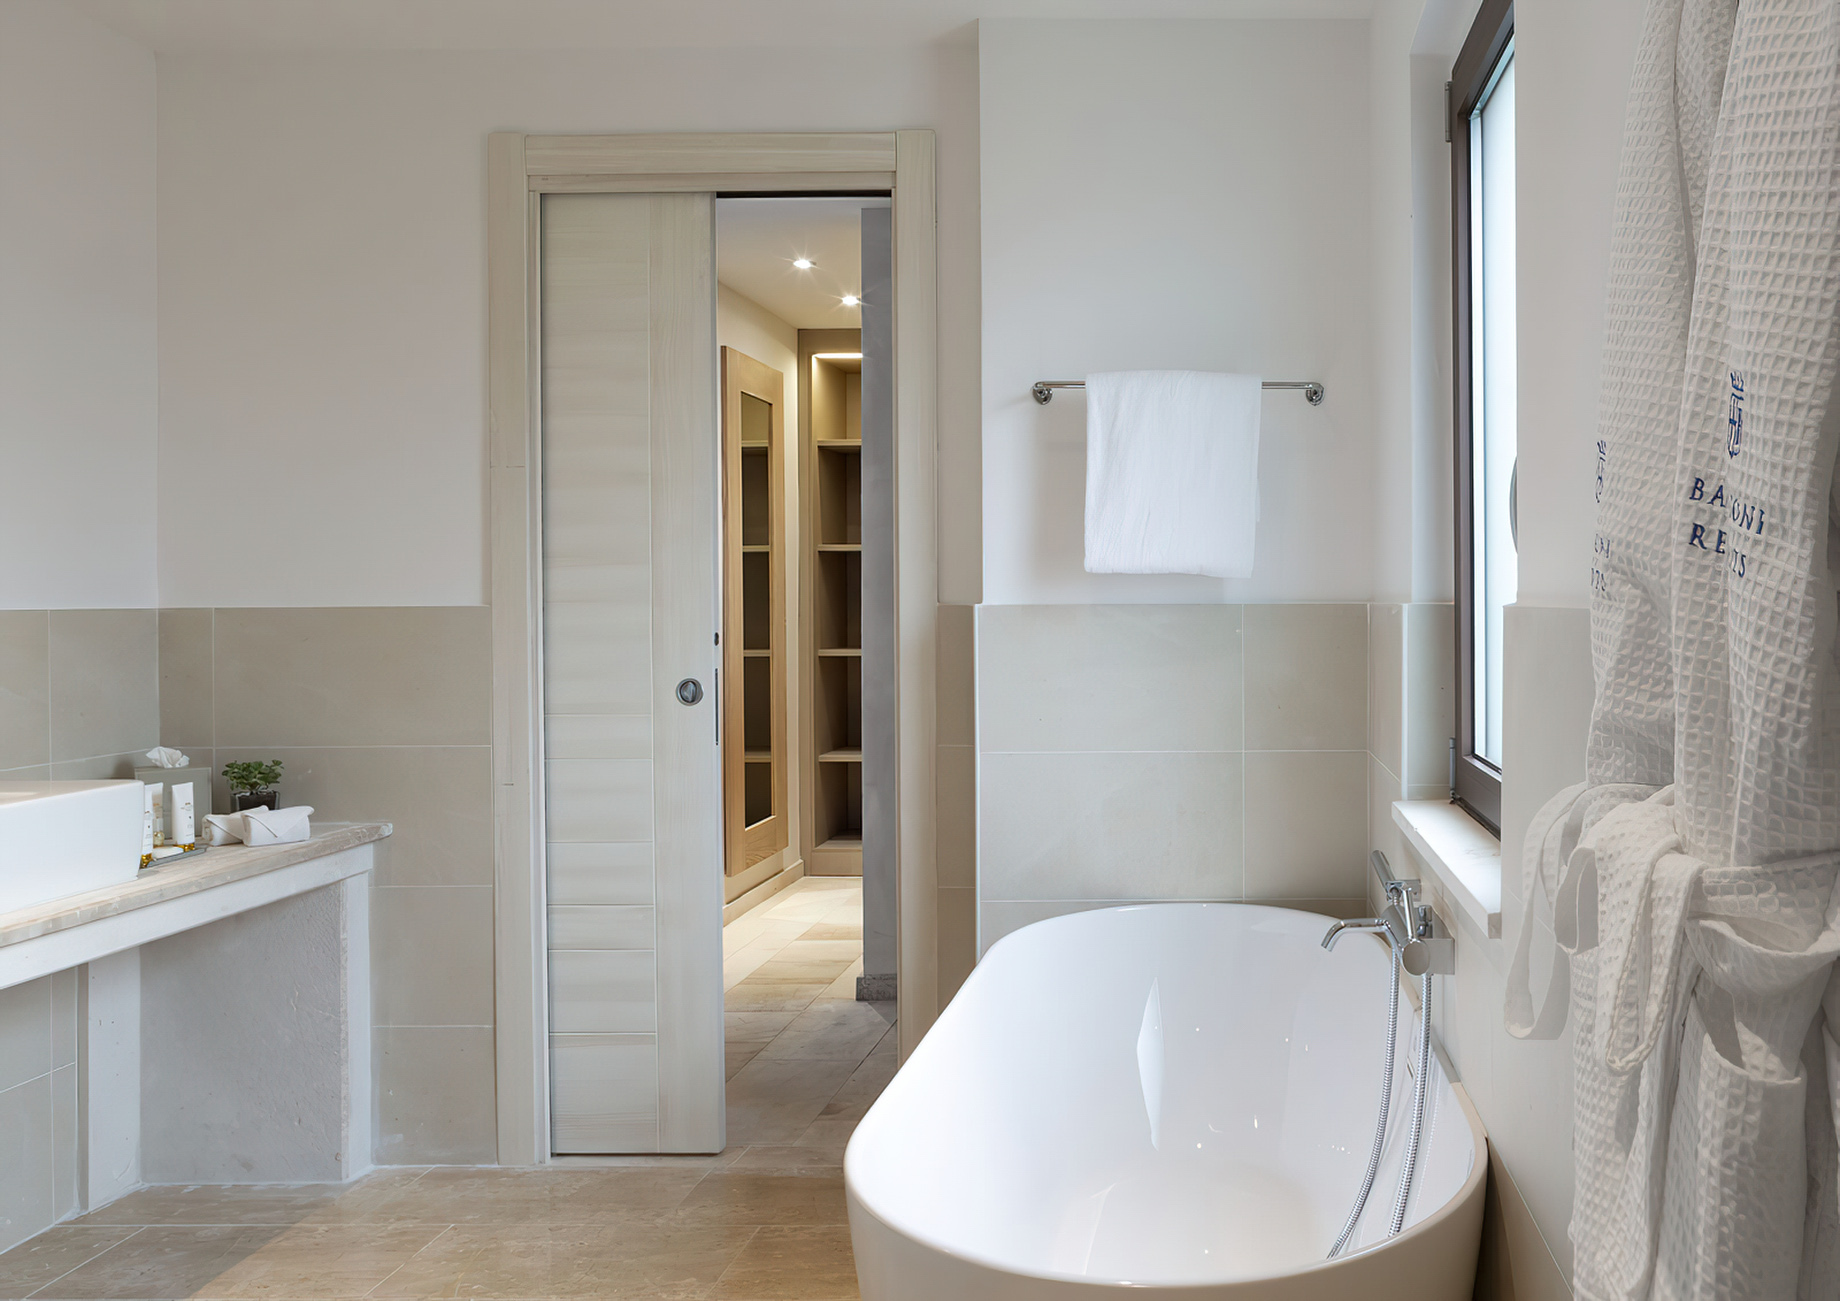 Baglioni Resort Sardinia – San Teodoro, Sardegna, Italy – Grand Deluxe Sea View Room Bathroom